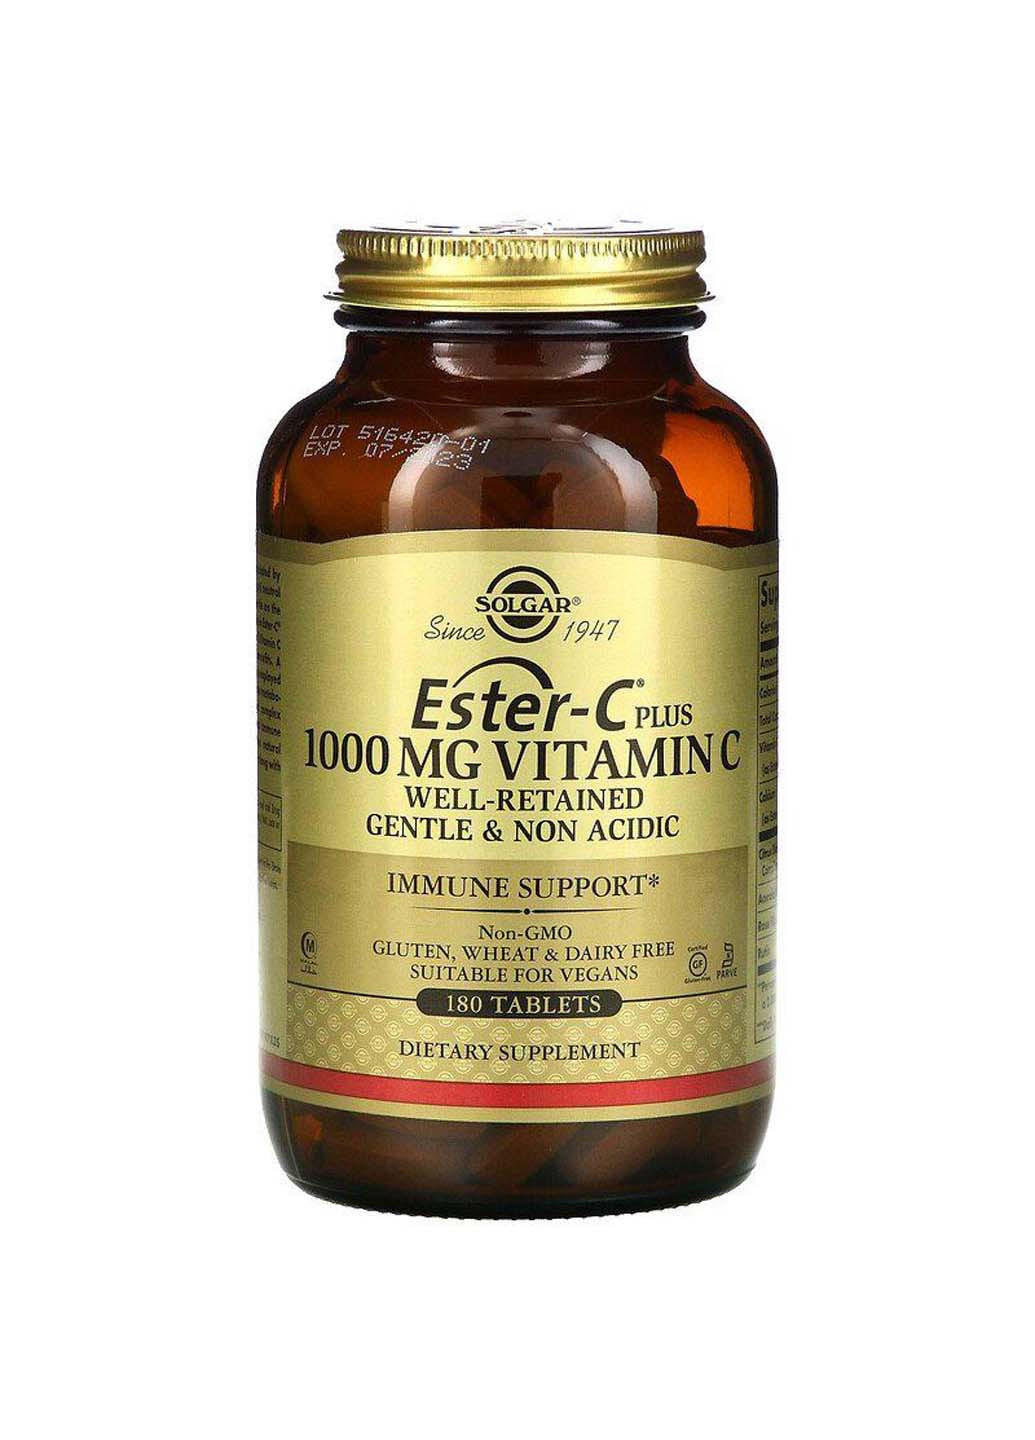 Эстер-С плюс Ester-C Plus витамин C 1000 мг 180 таблеток Solgar (256932021)